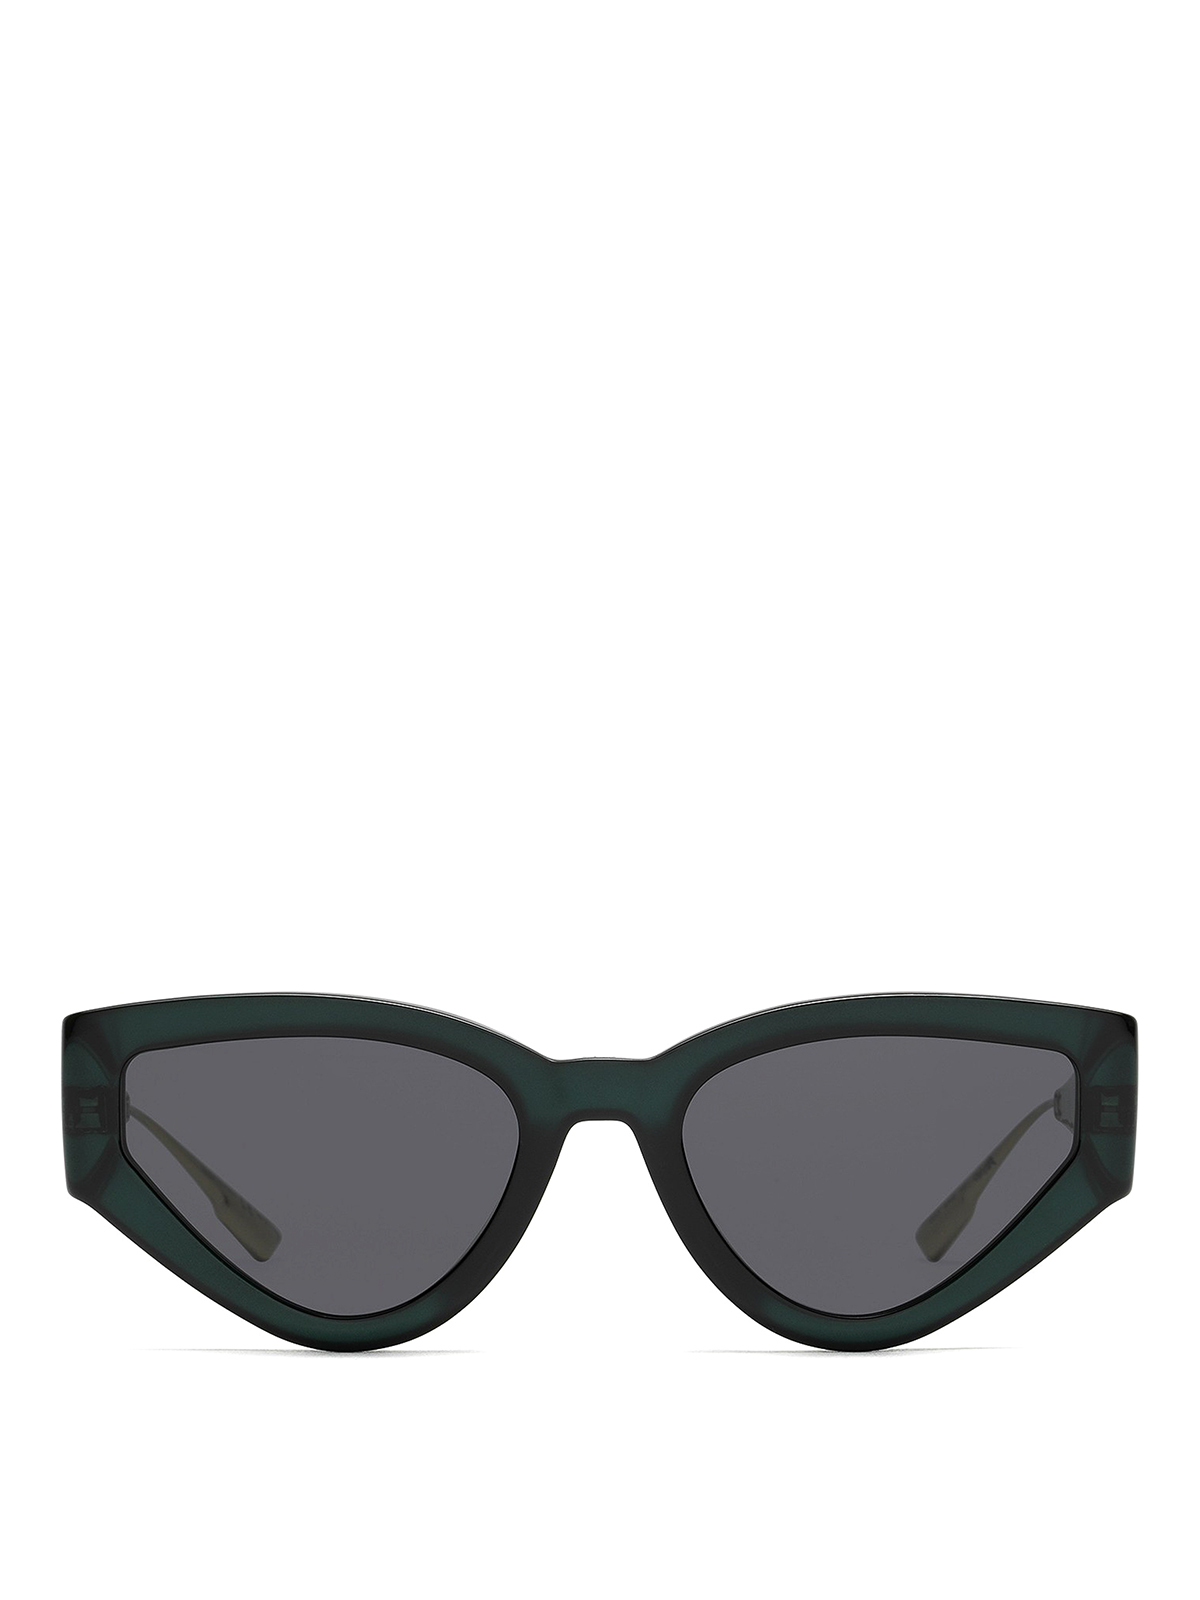 cat style dior sunglasses